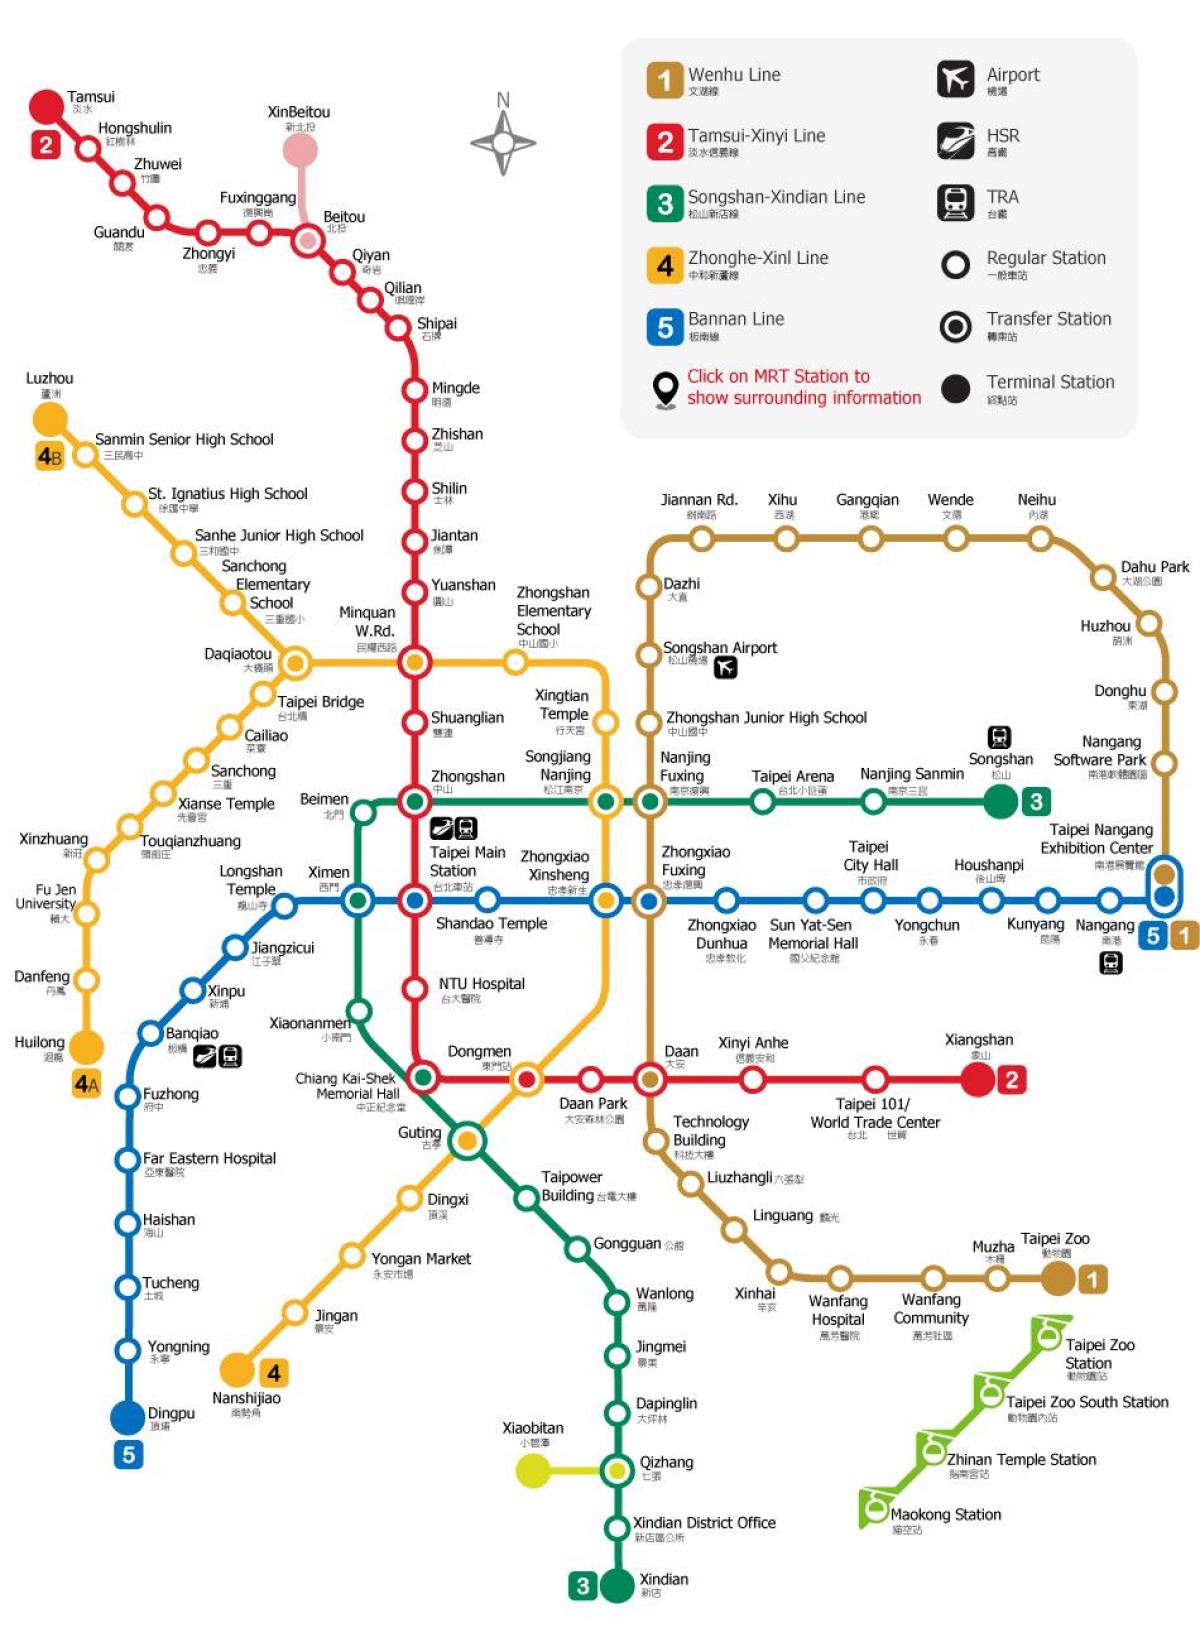 Taipei railway station map